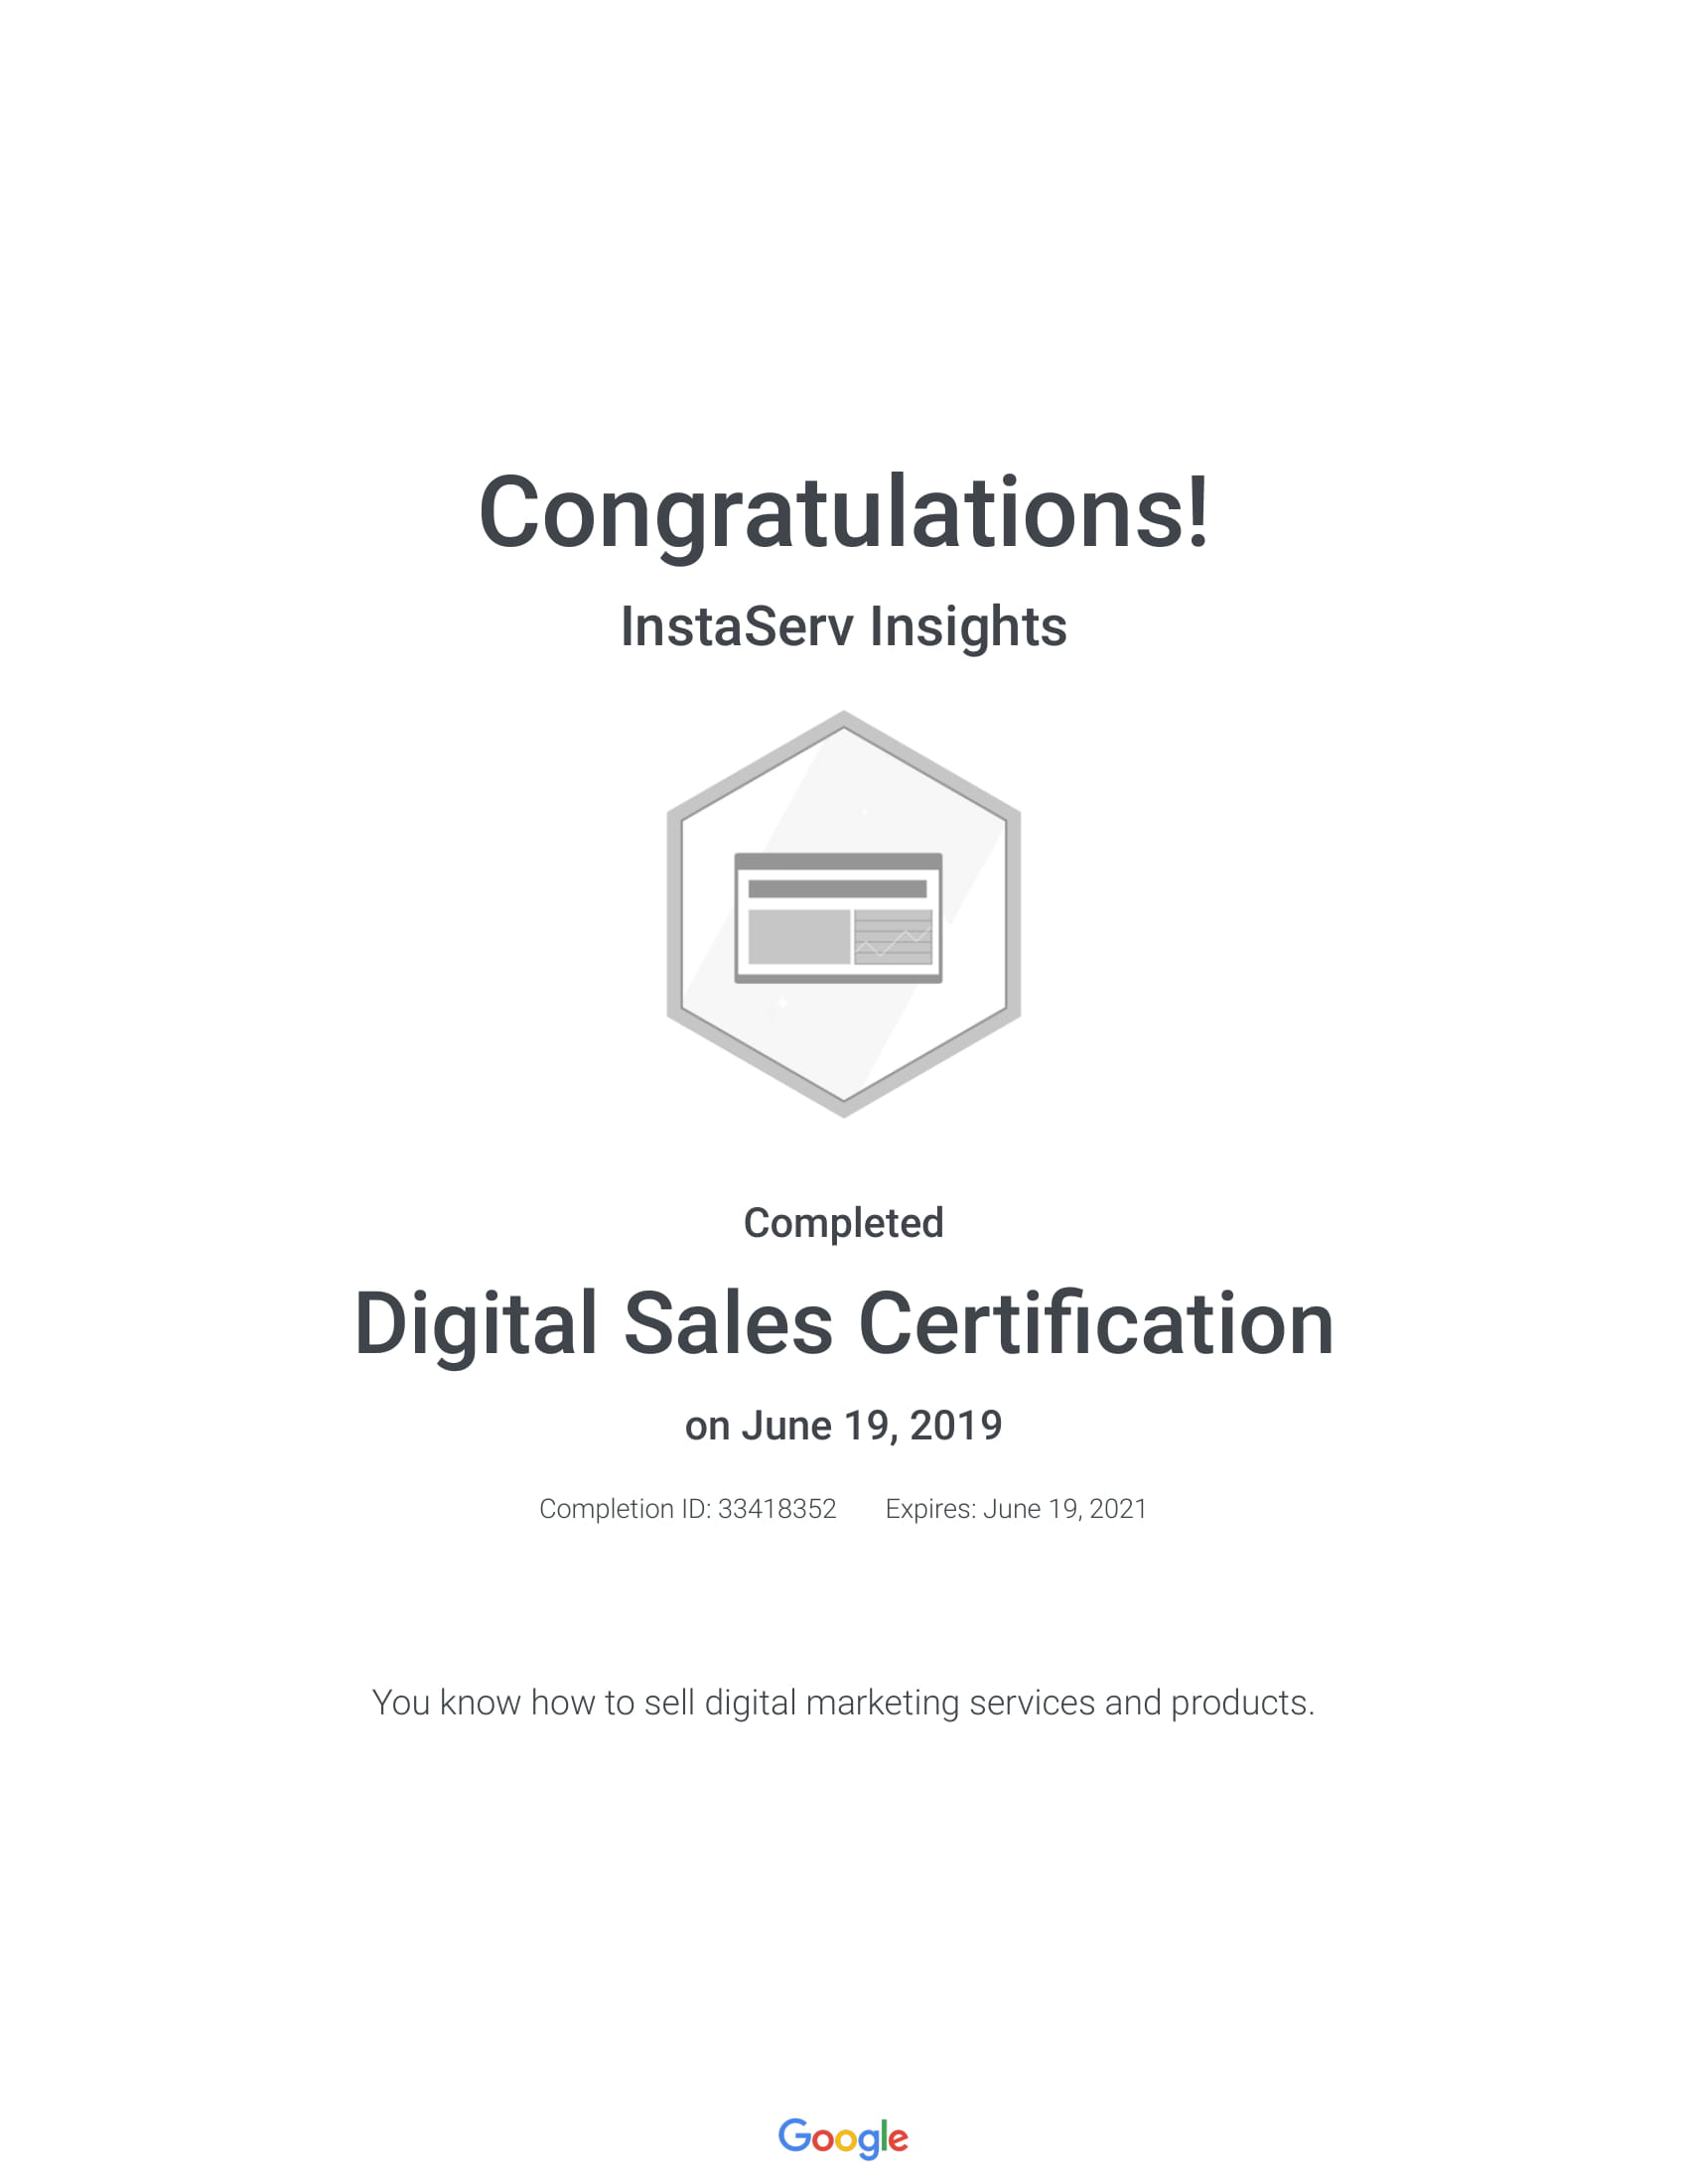 Digital Sale Certification